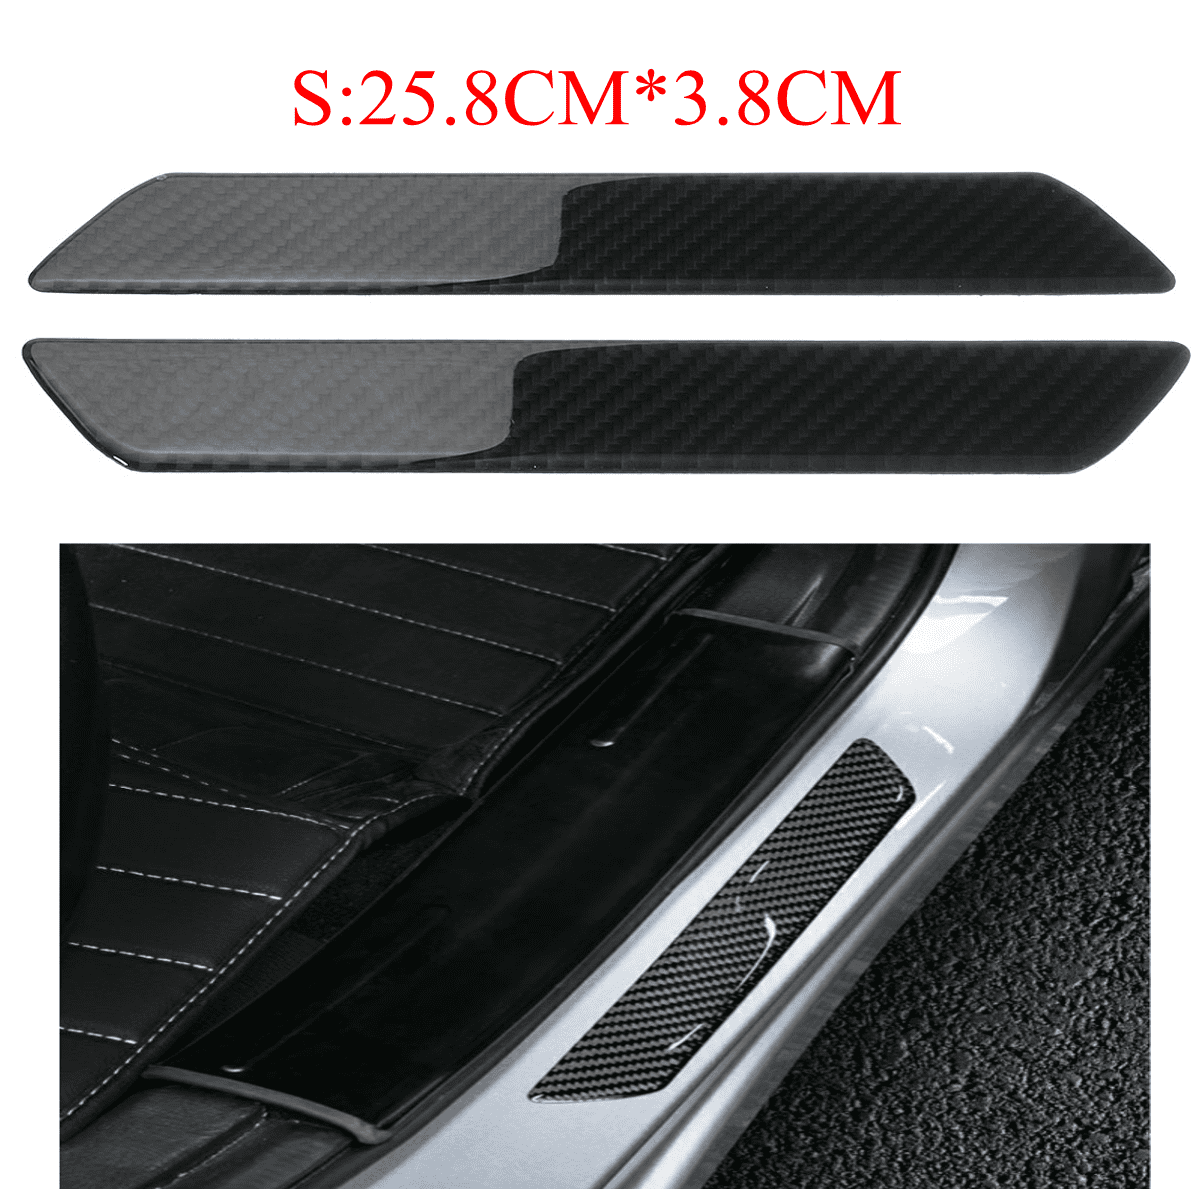 2x Carbon Fiber Car Auto Scuff Plate Door Sill Guard Cover Step Protector 49CM